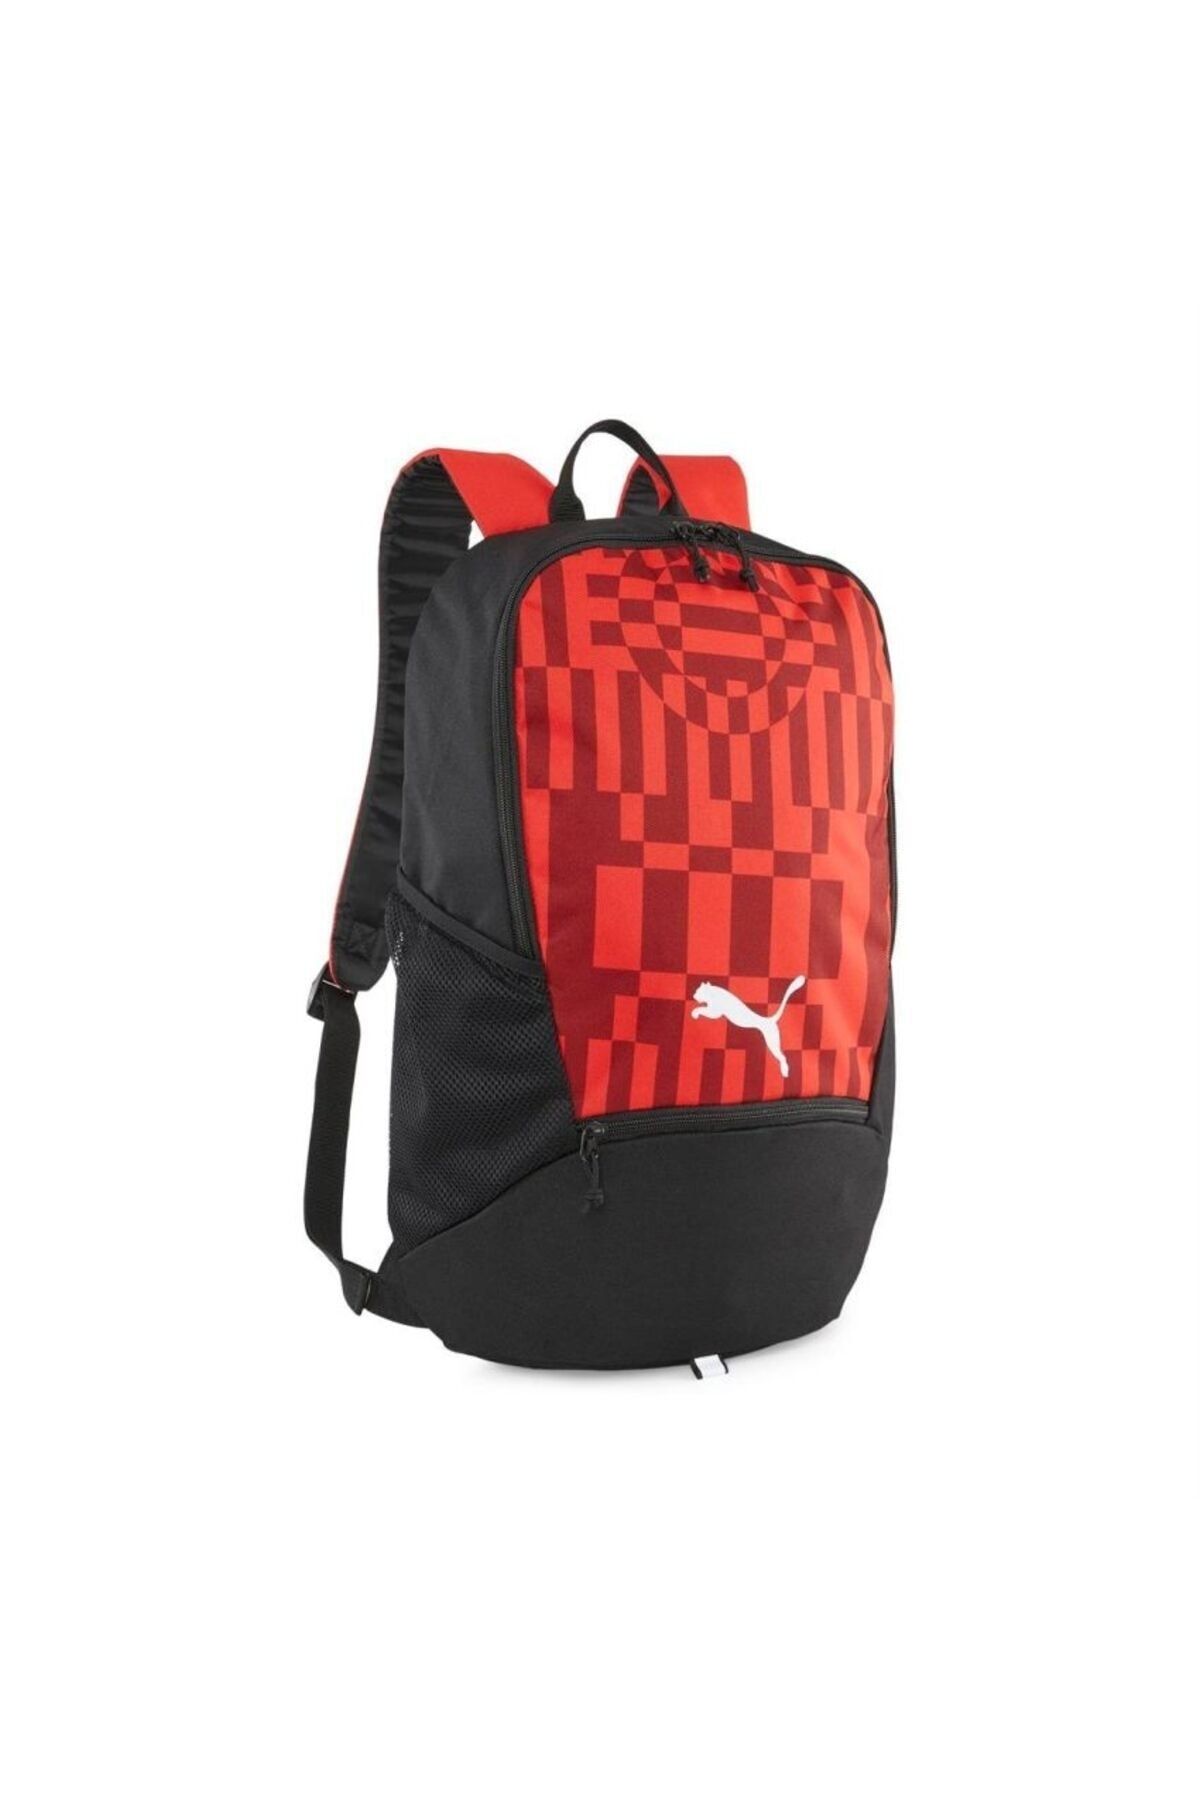 Puma individualRISE Backpack Kırmızı Unisex Sırt Çantası 07991101